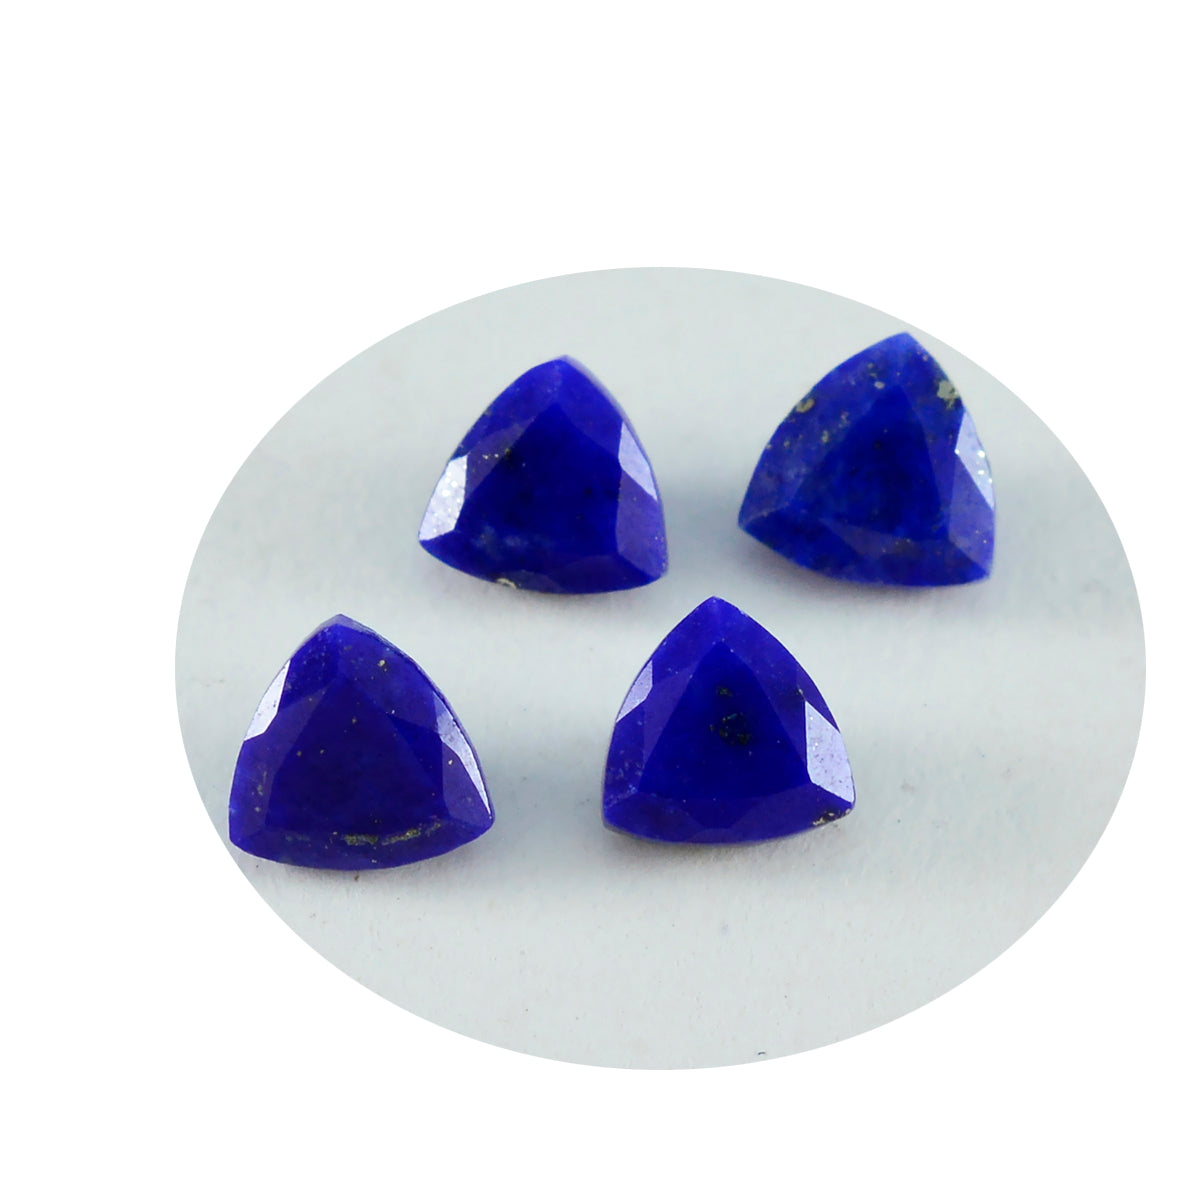 Riyogems 1PC Natural Blue Lapis Lazuli Faceted 8x8 mm Trillion Shape amazing Quality Loose Stone